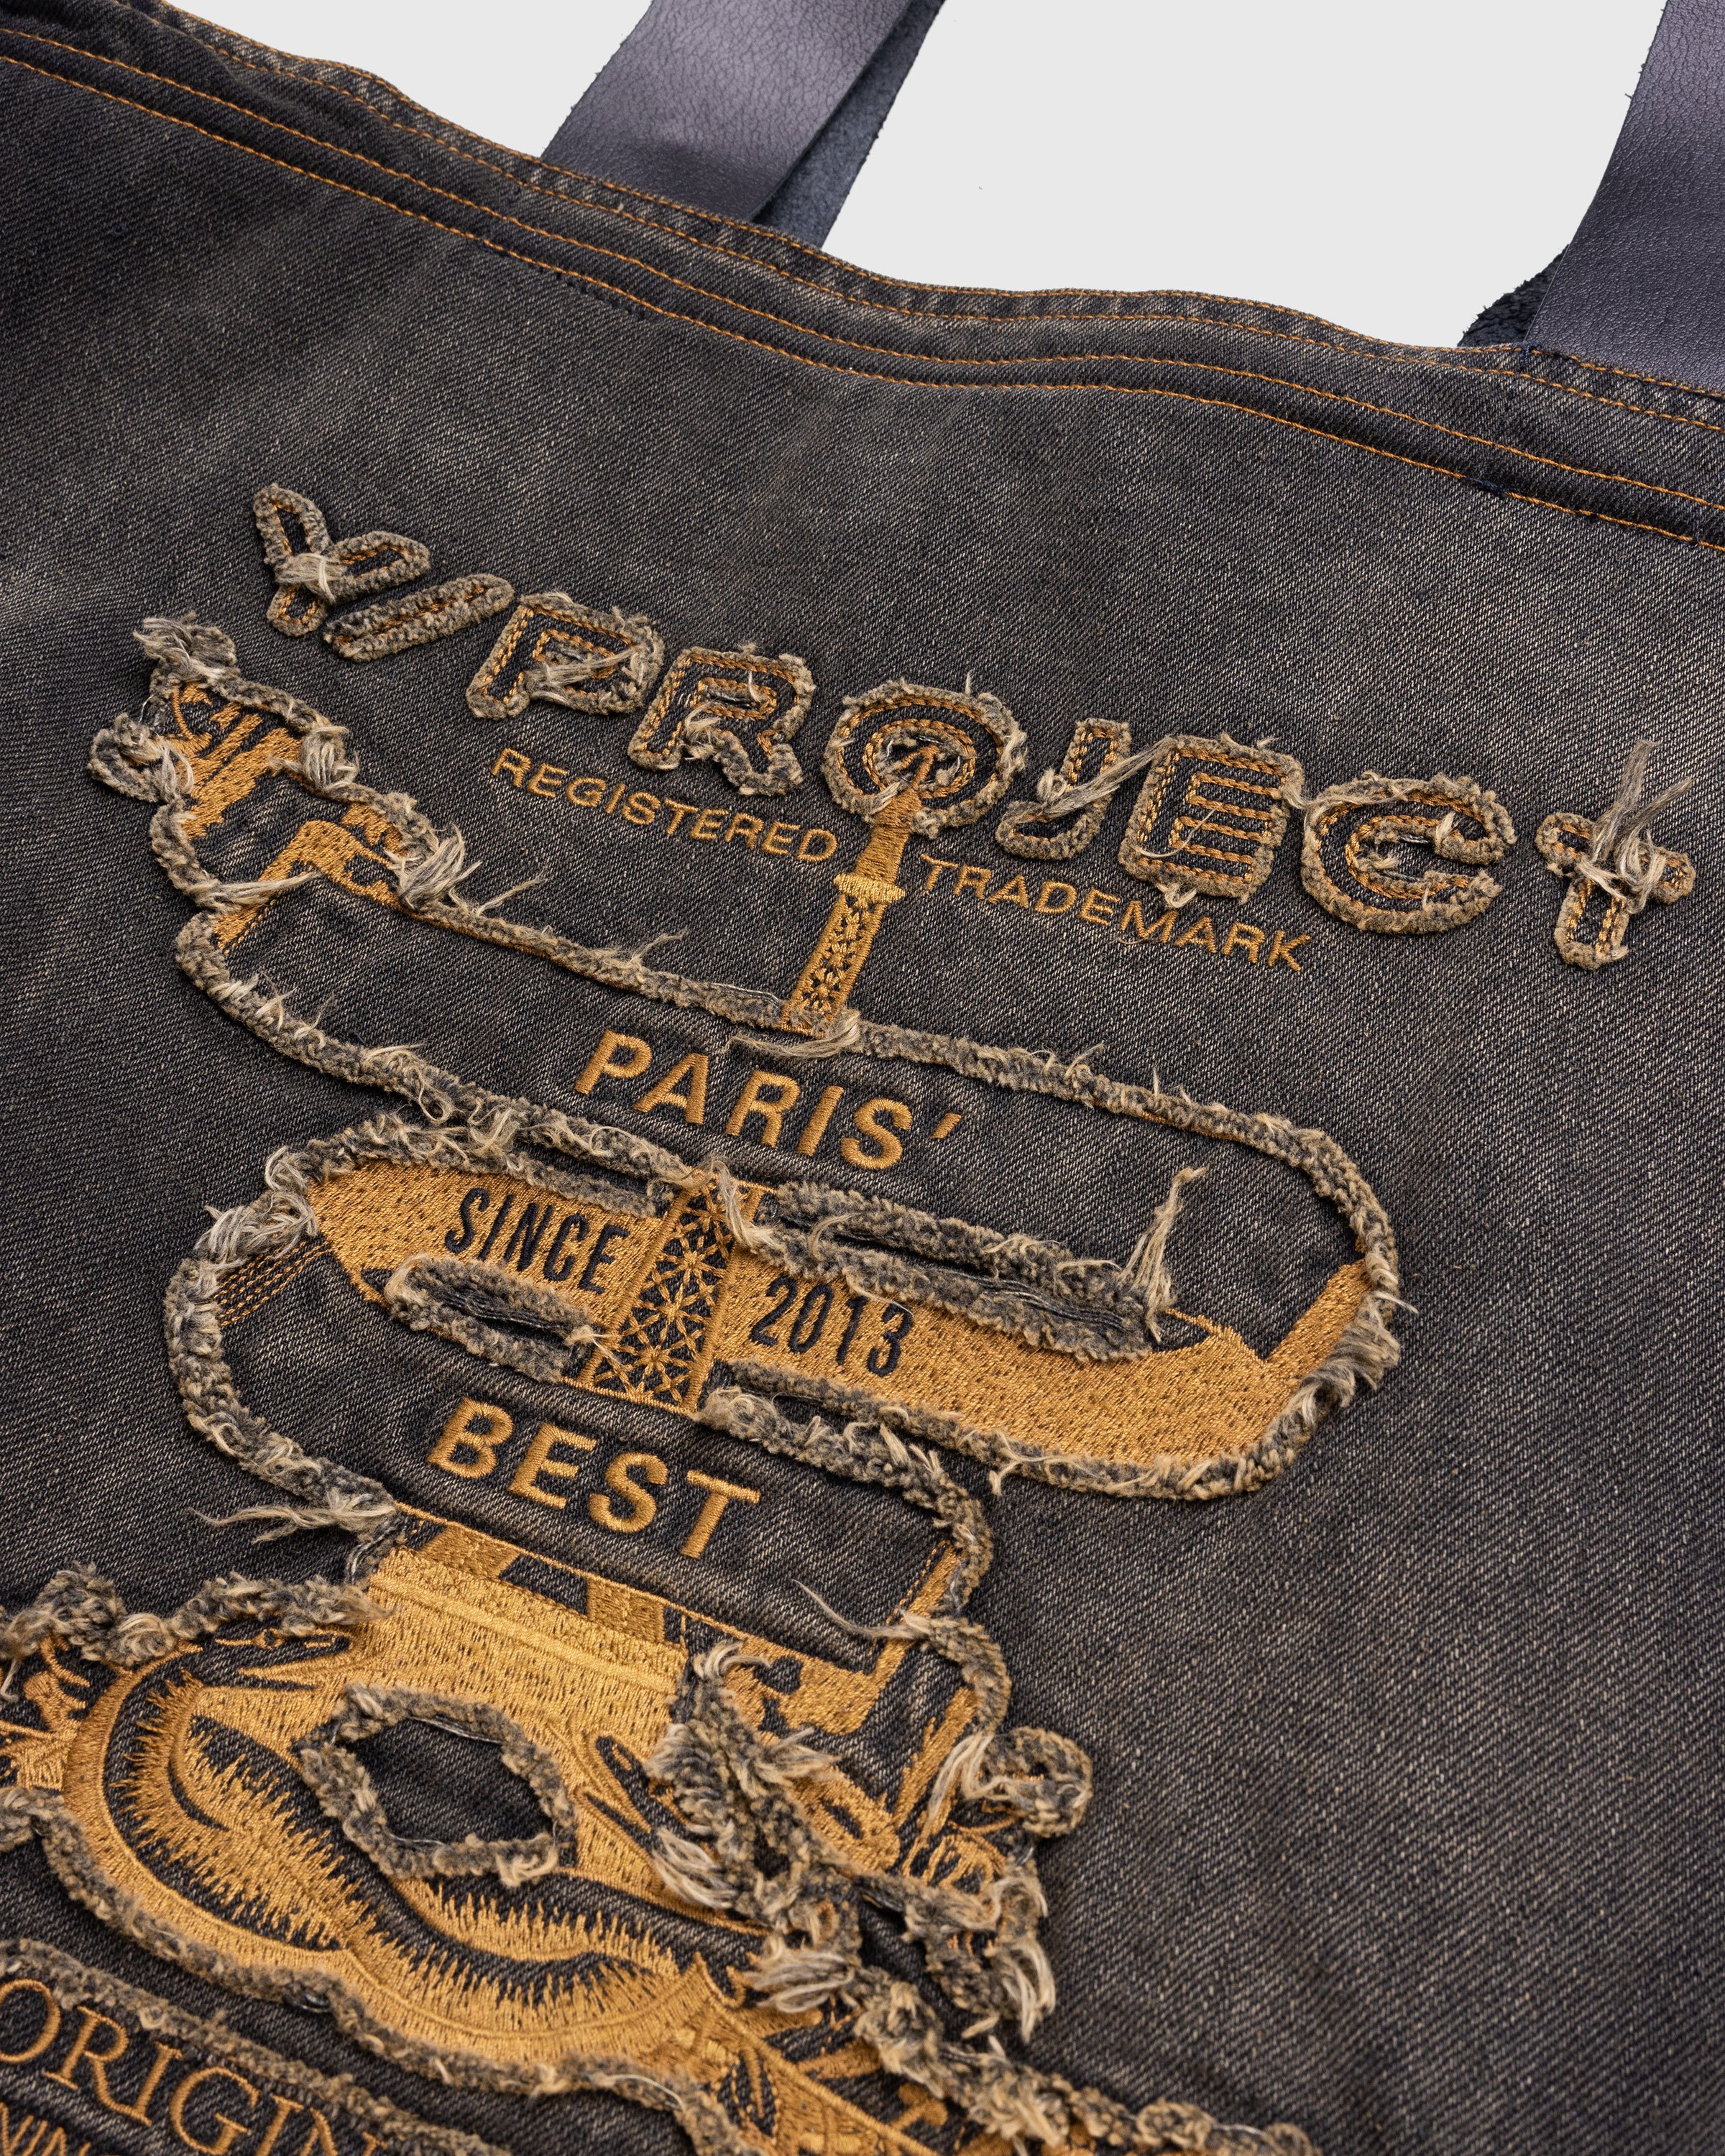 Y/Project - Paris' Best Tote Bag Vintage Black - Accessories - Black - Image 4